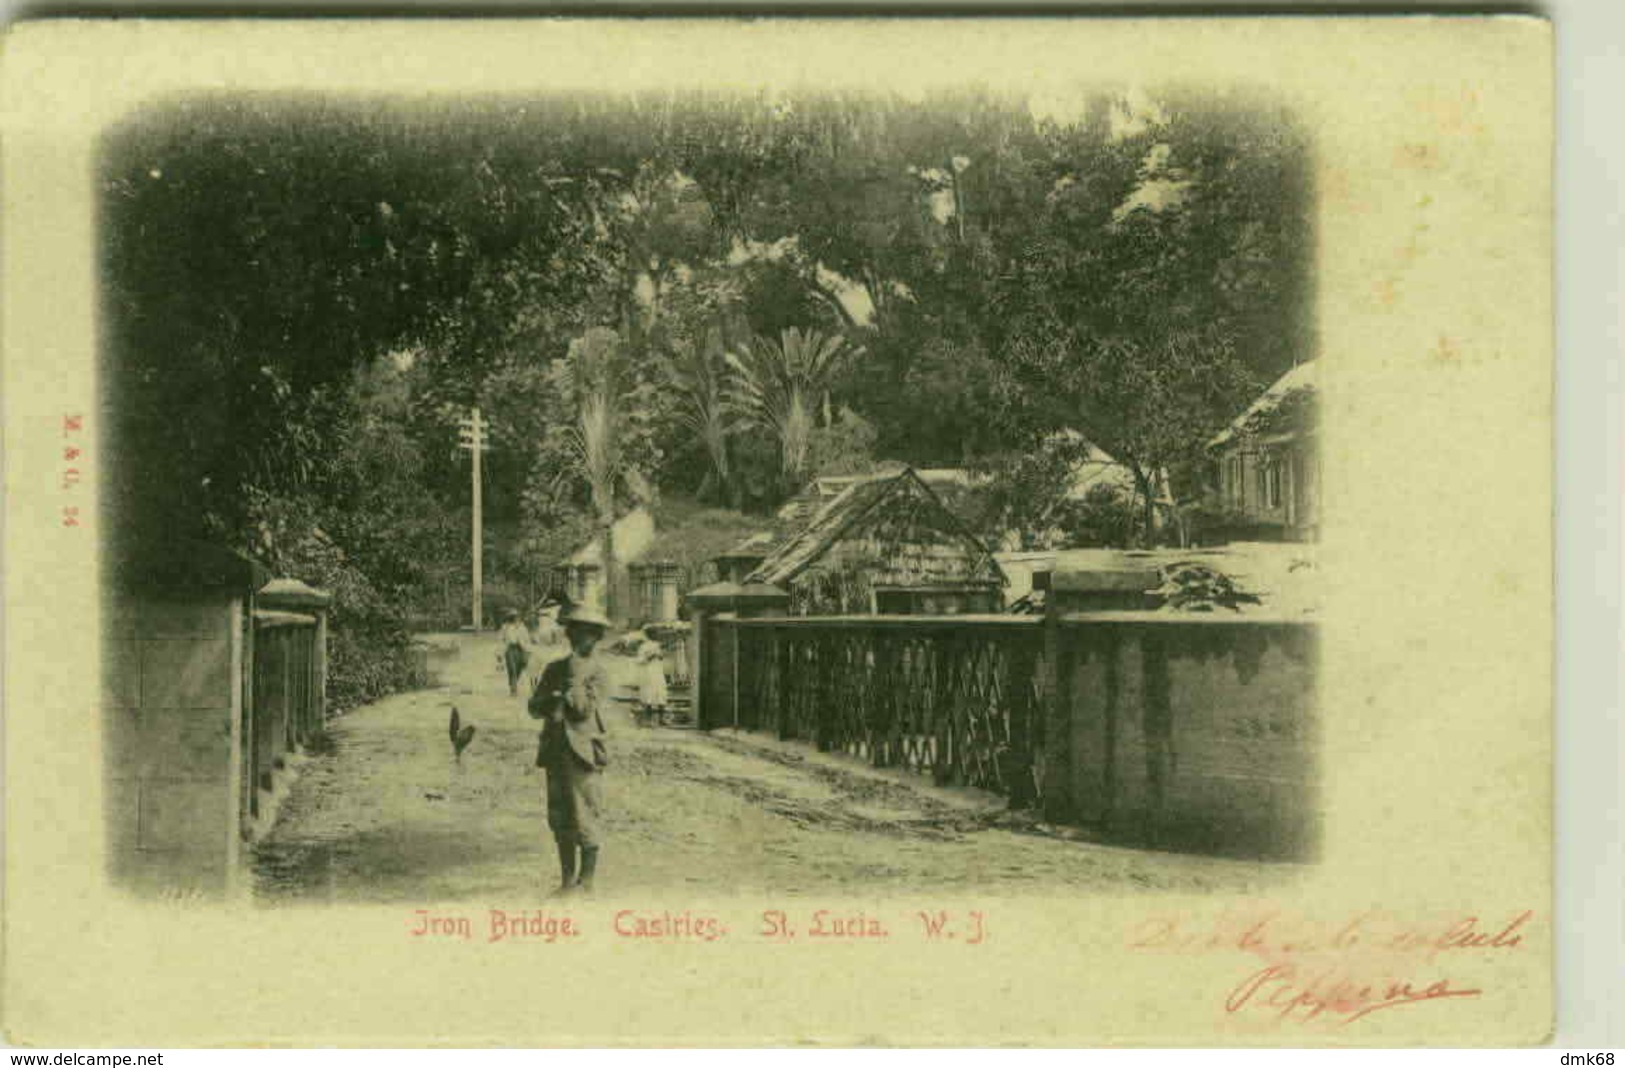 IRON BRIDGE CASTRIES ST. LUCIA W.J. - M.& C. 1900s (BG3215) - Saint Lucia